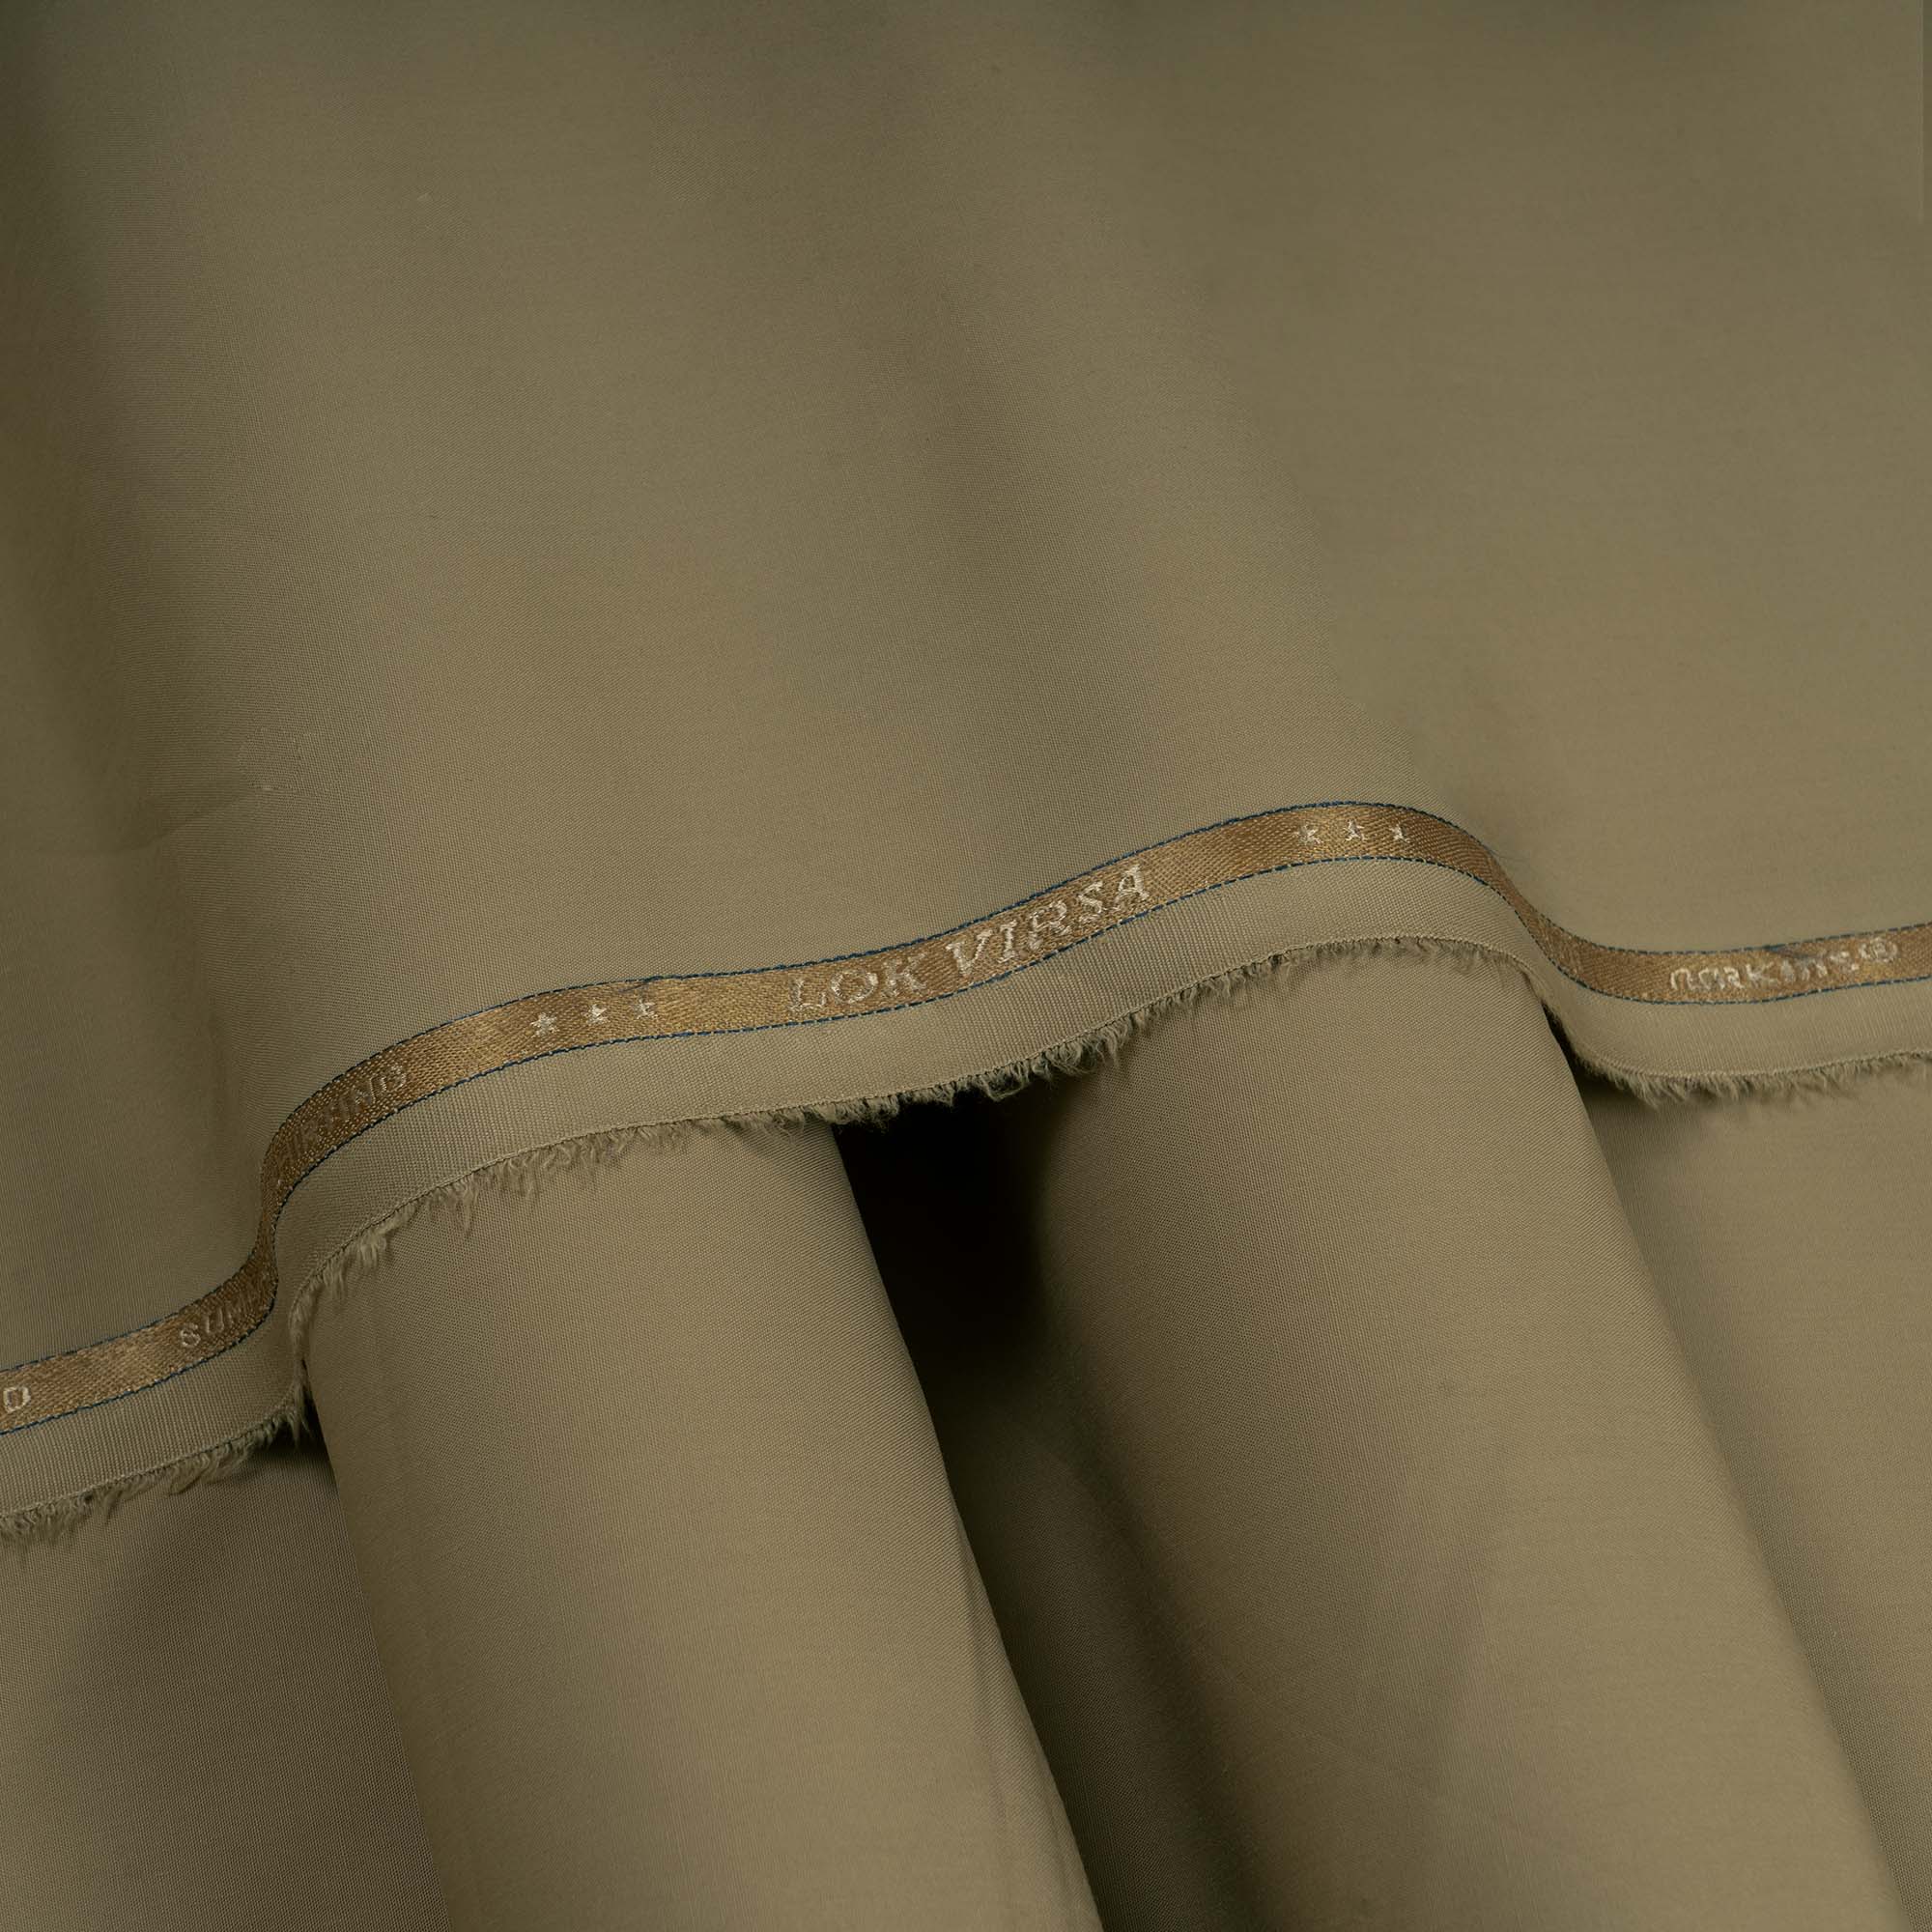 Lok Virsa - Summer Blended (4.5 Mtr) - Narkin's Textile Industries